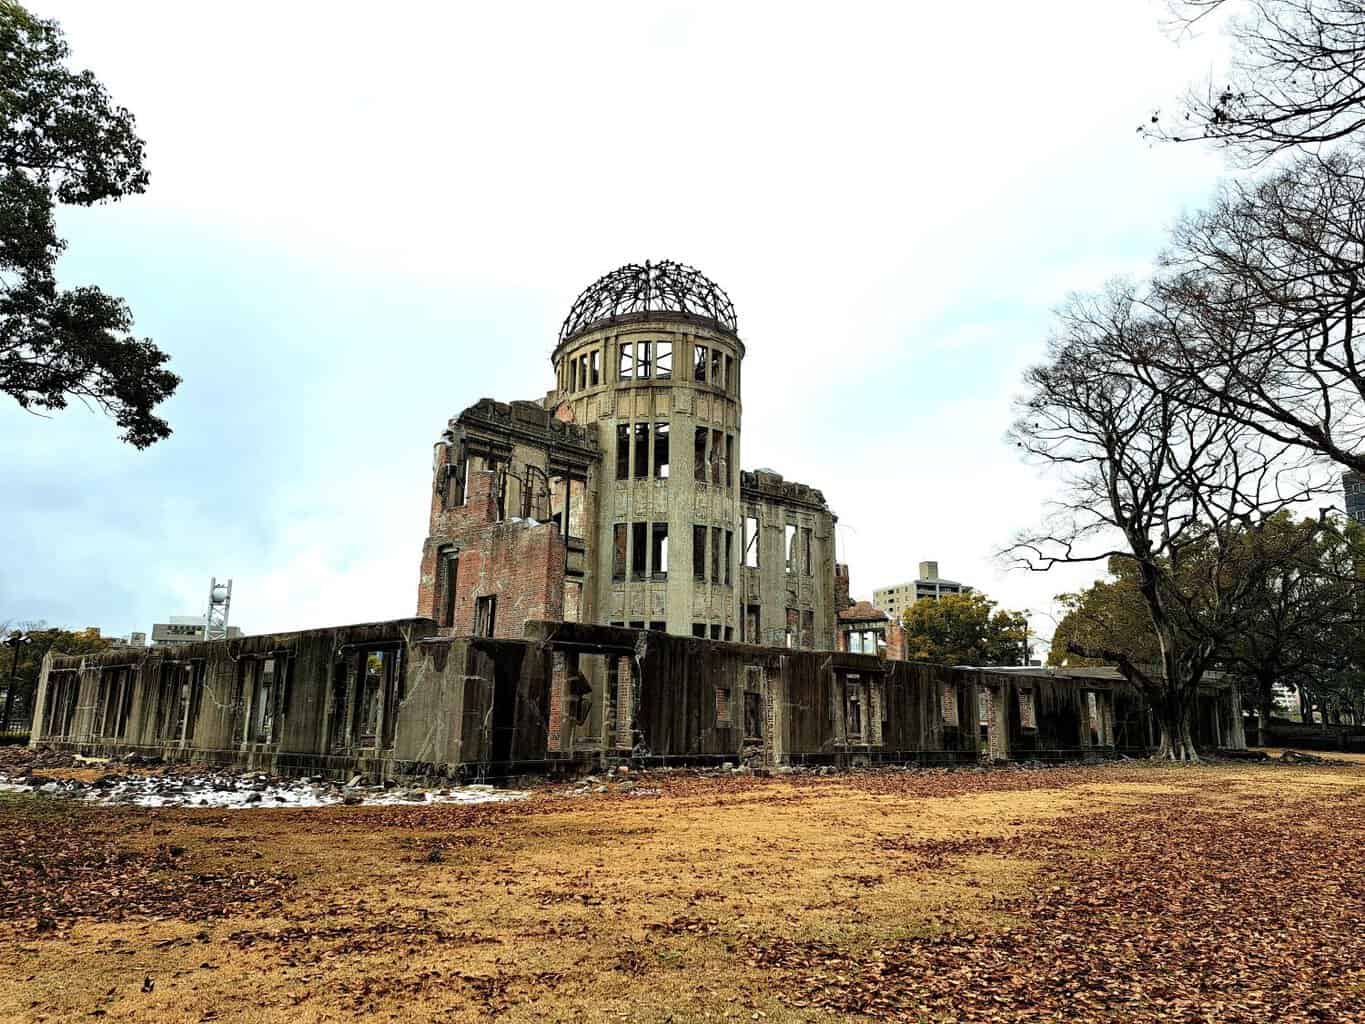 Atomic Bome Dome, Hiroshima